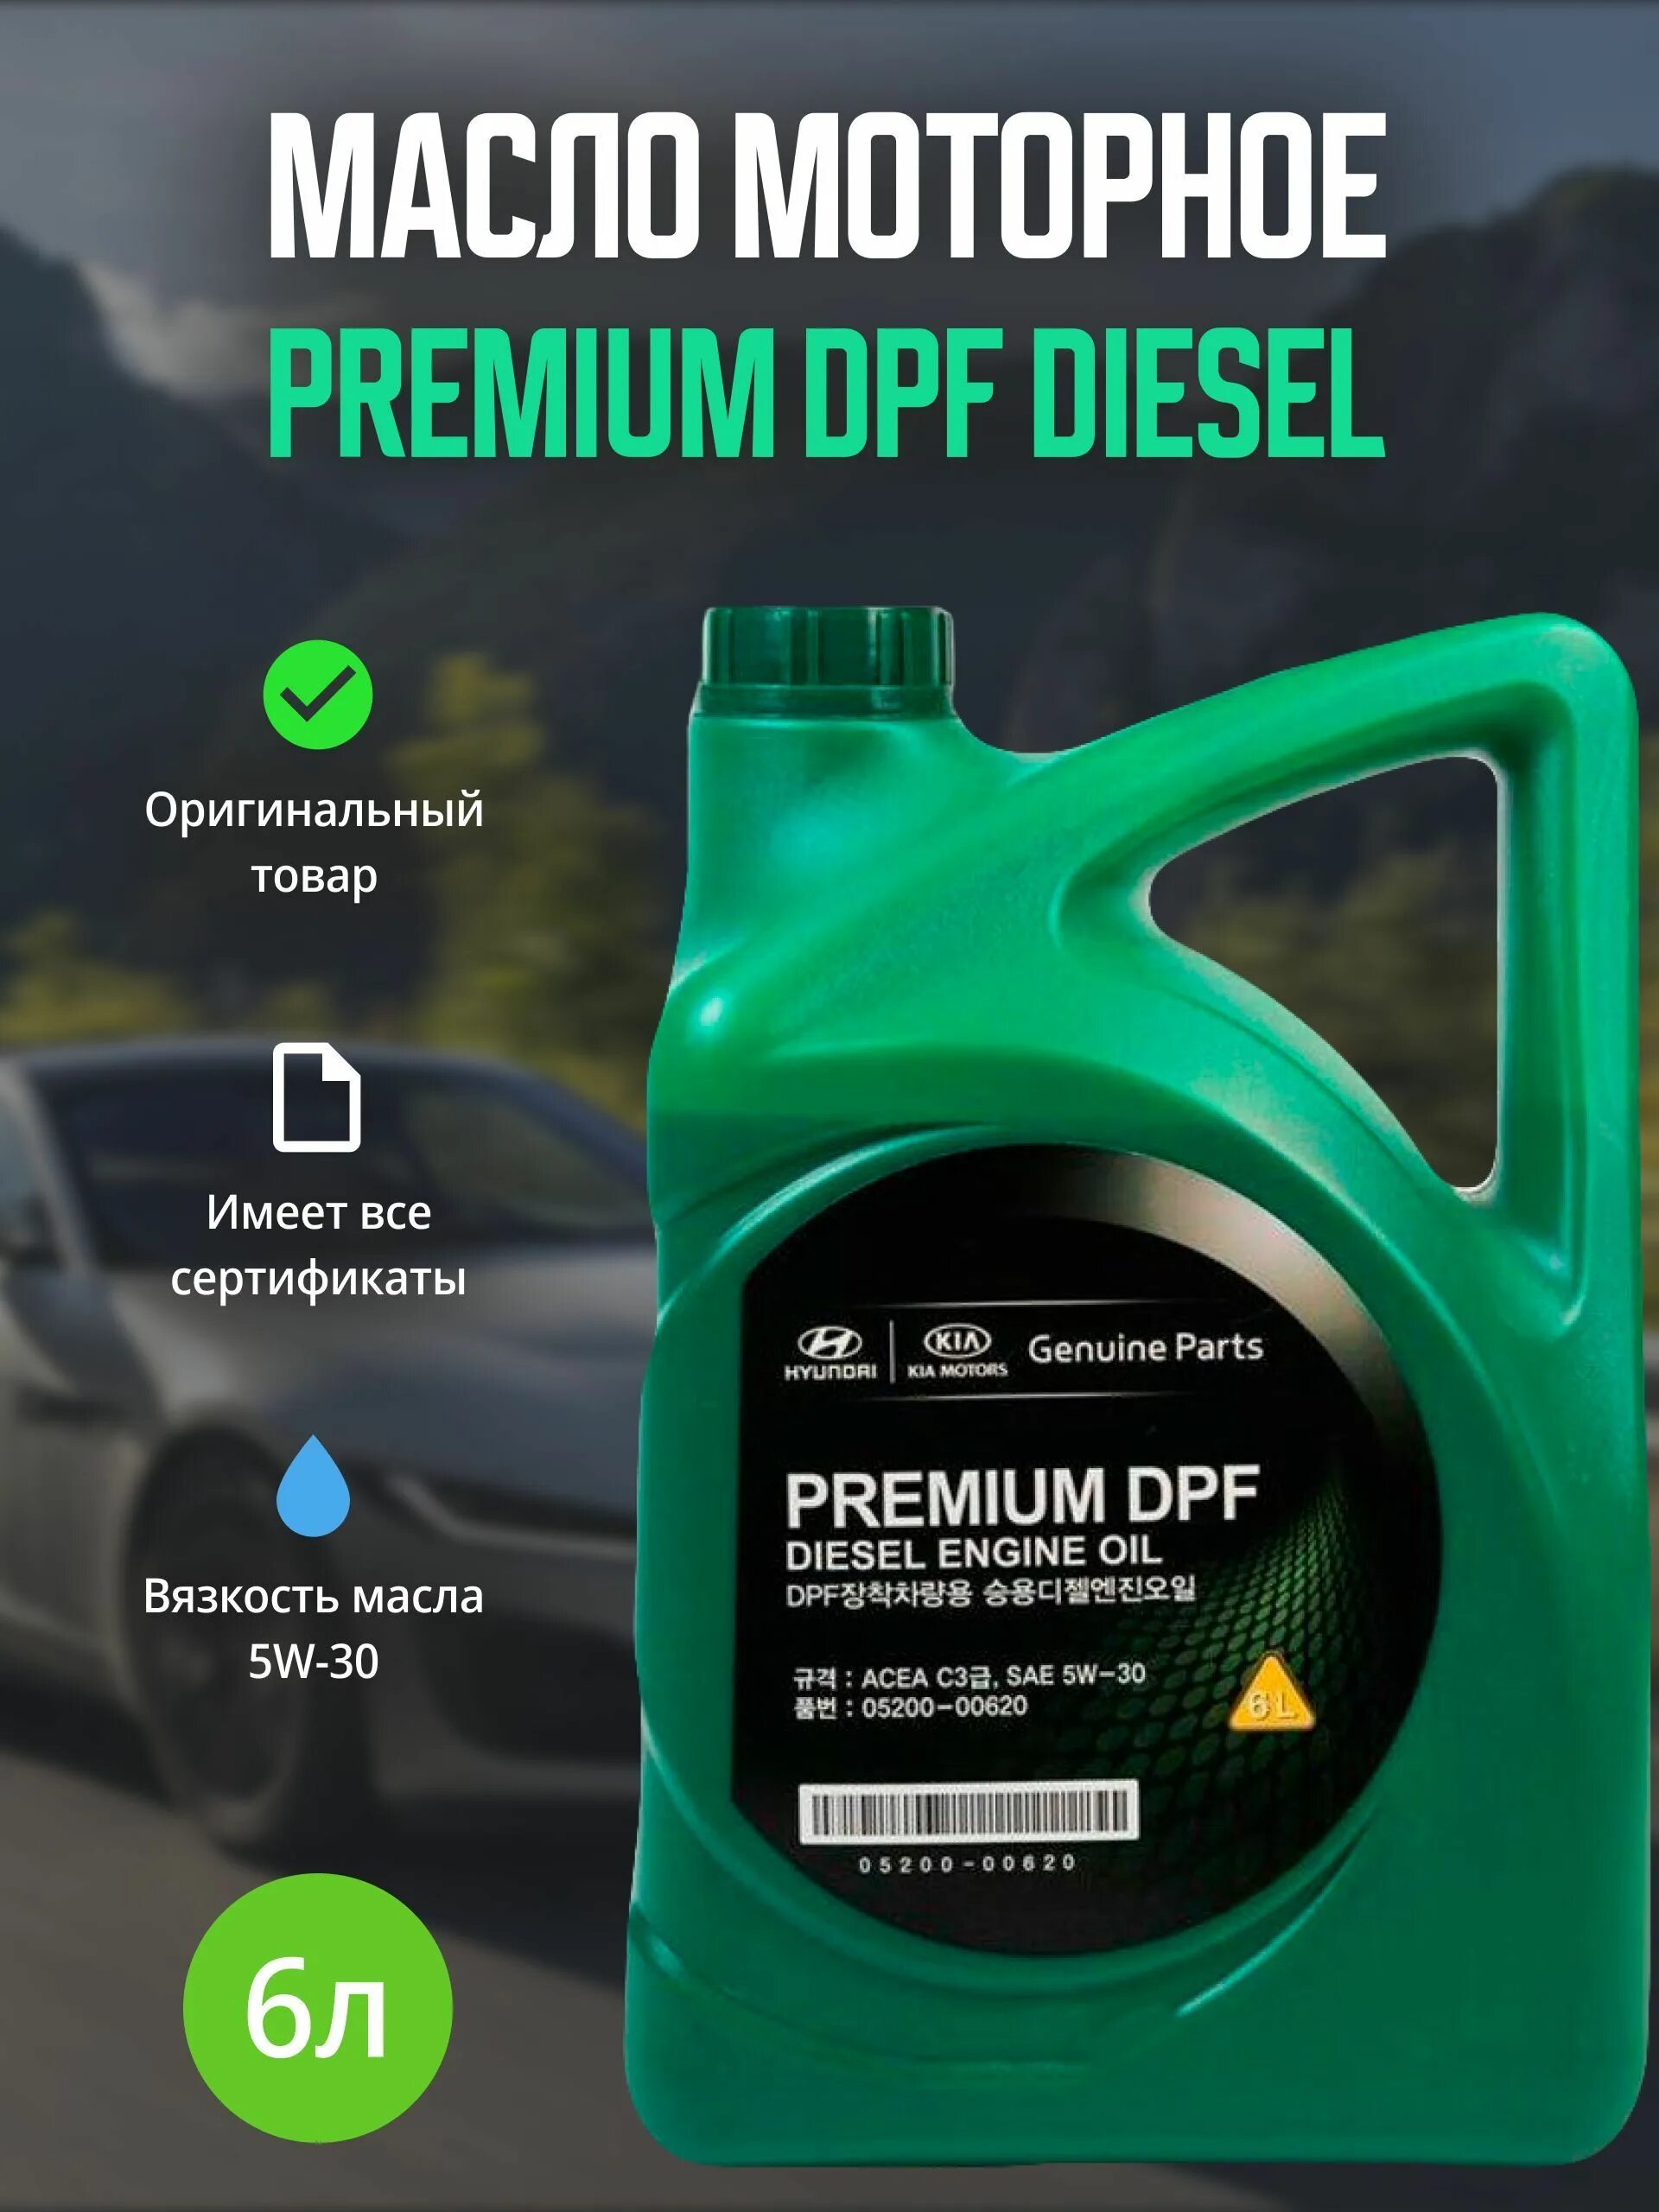 Масло kia premium dpf diesel. Premium DPF Diesel 5w-30. Hyundai Kia Premium DPF 5w-30 6 л. 05200-00620 5w30 масло моторное Premium DPF Diesel 6л. Hyundai. Масло Хендай оригинал дизель.